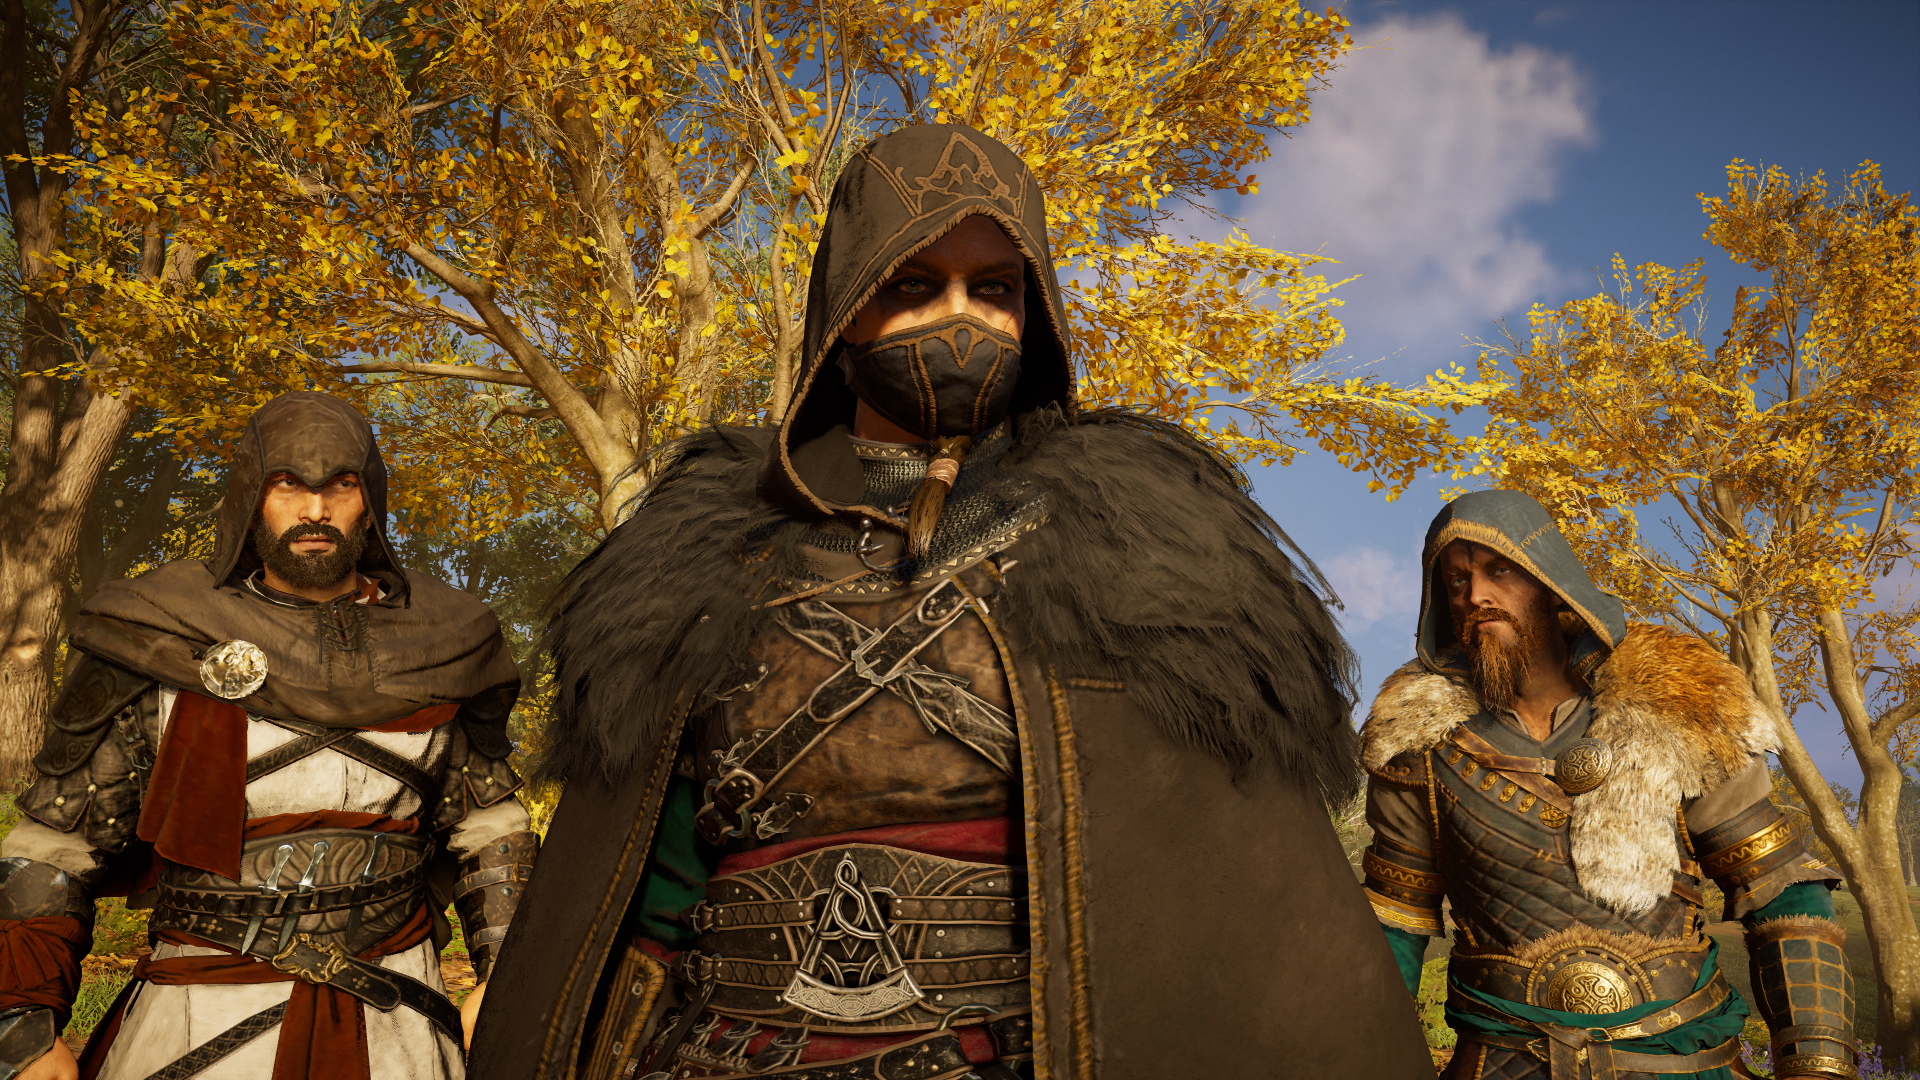 Reviving fallen Jomsvikings during raids in Assassin's Creed Valhalla